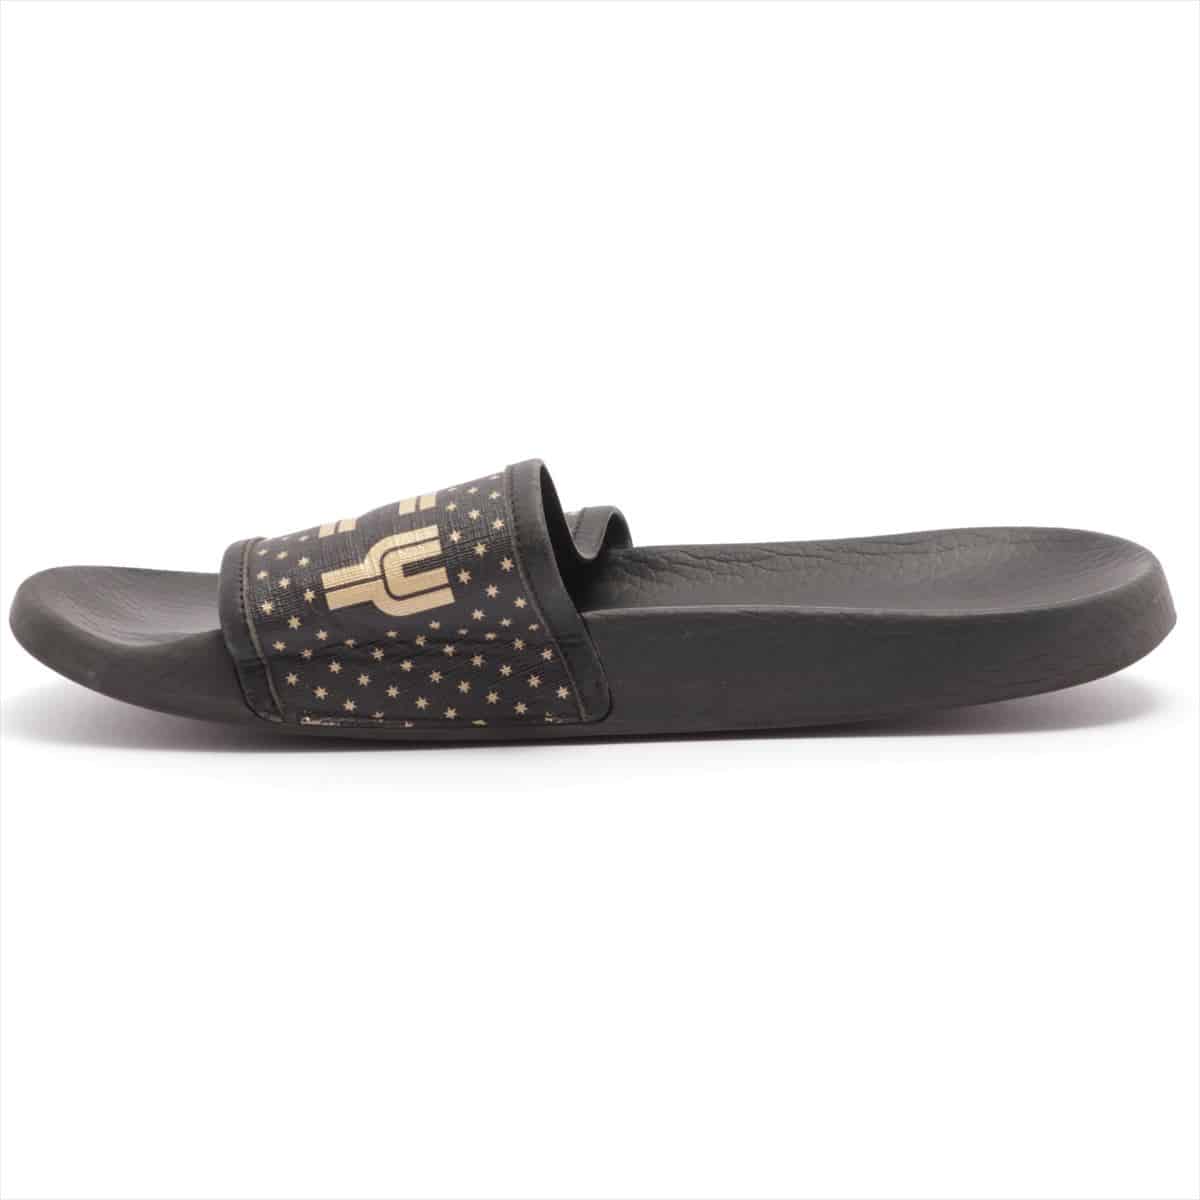 Gucci Leather Sandals Unknown size Men's Black 519996 SEGA STAR slides GUCCY